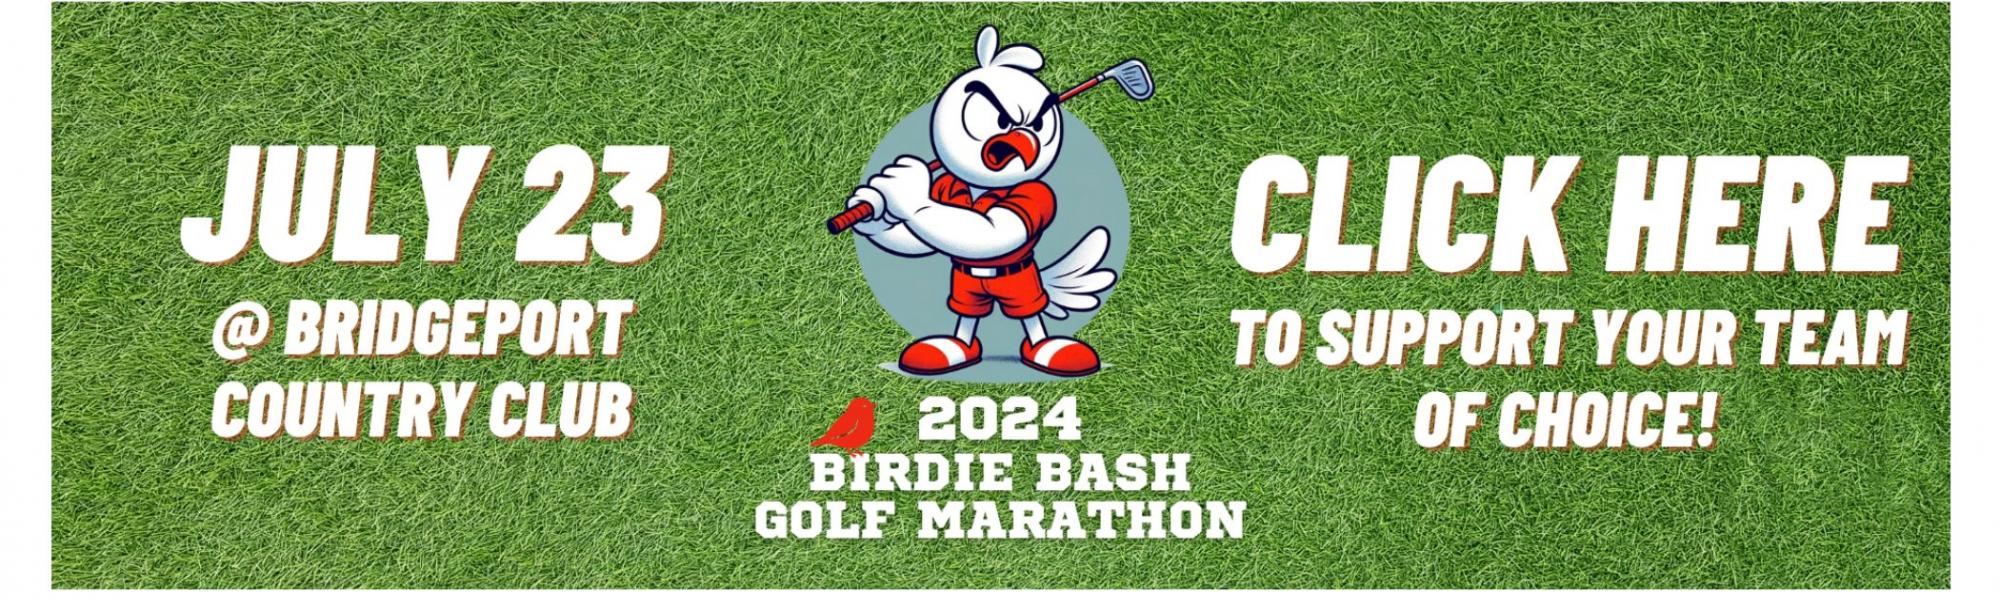 Birdie Bash Marathon!  Support and Sponsor your favorite team!